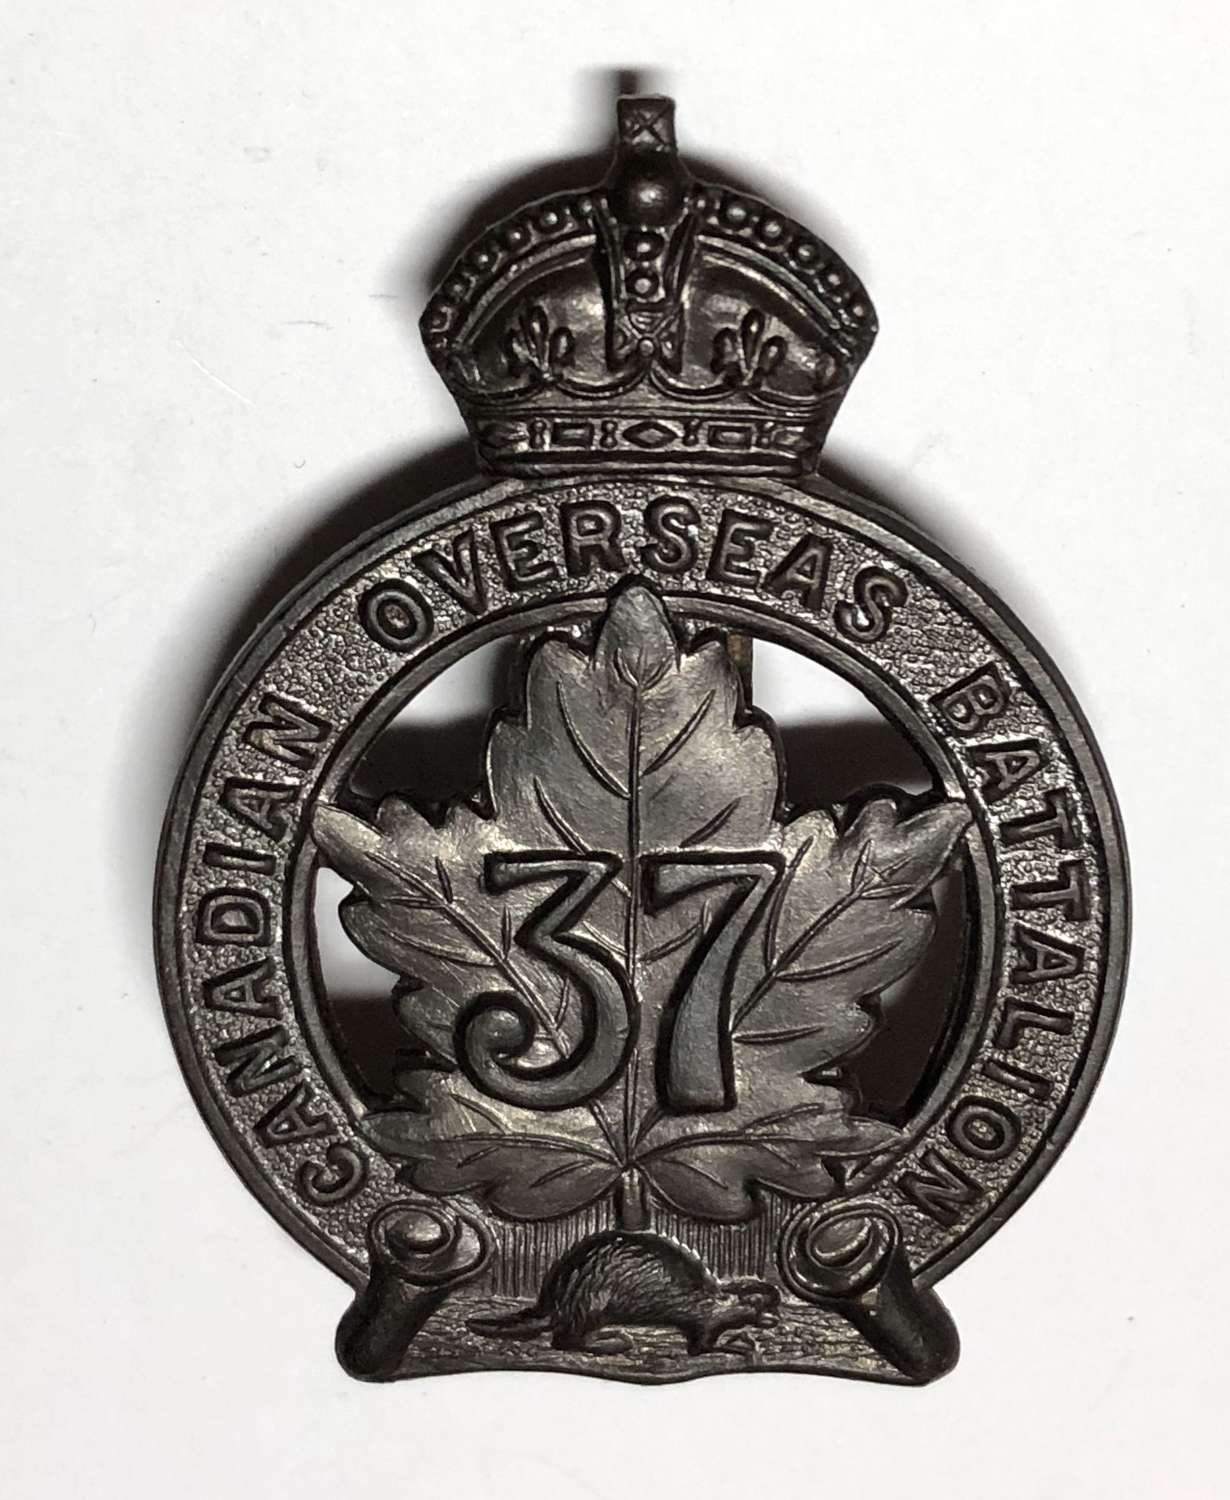 Canada 37th Battalion (Toronto) CEF WW1 cap badge by Tiptaft & Sons